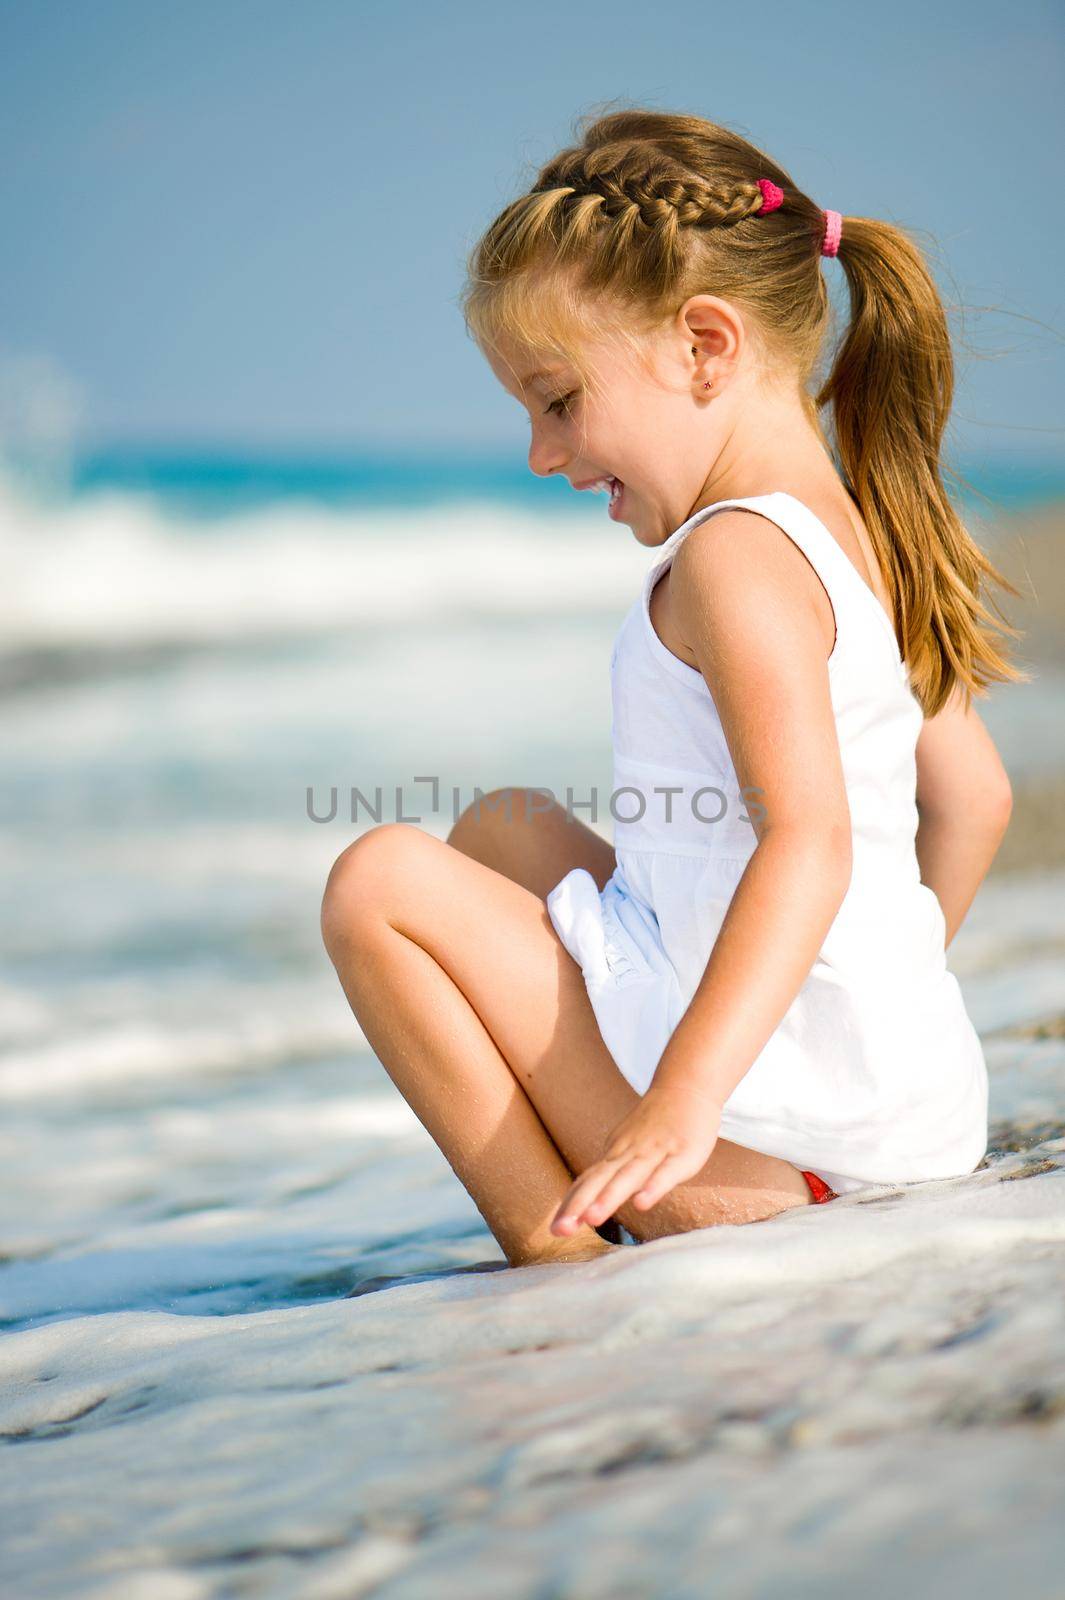 little girl on the beach by tan4ikk1